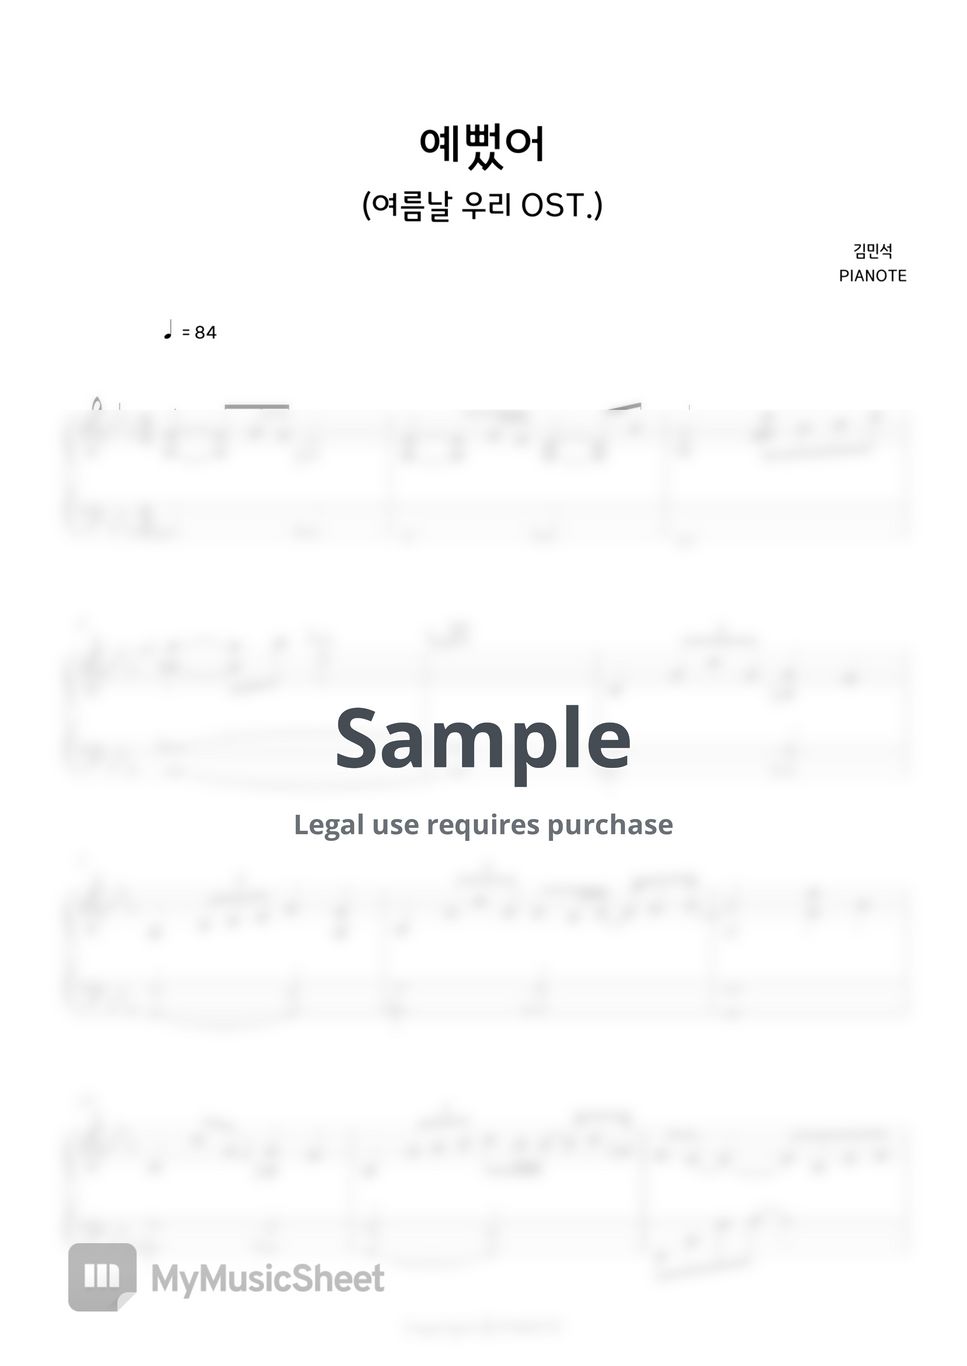 Day6 - 예뻤어 (김민석 버전) by 피아노트PIANOTE